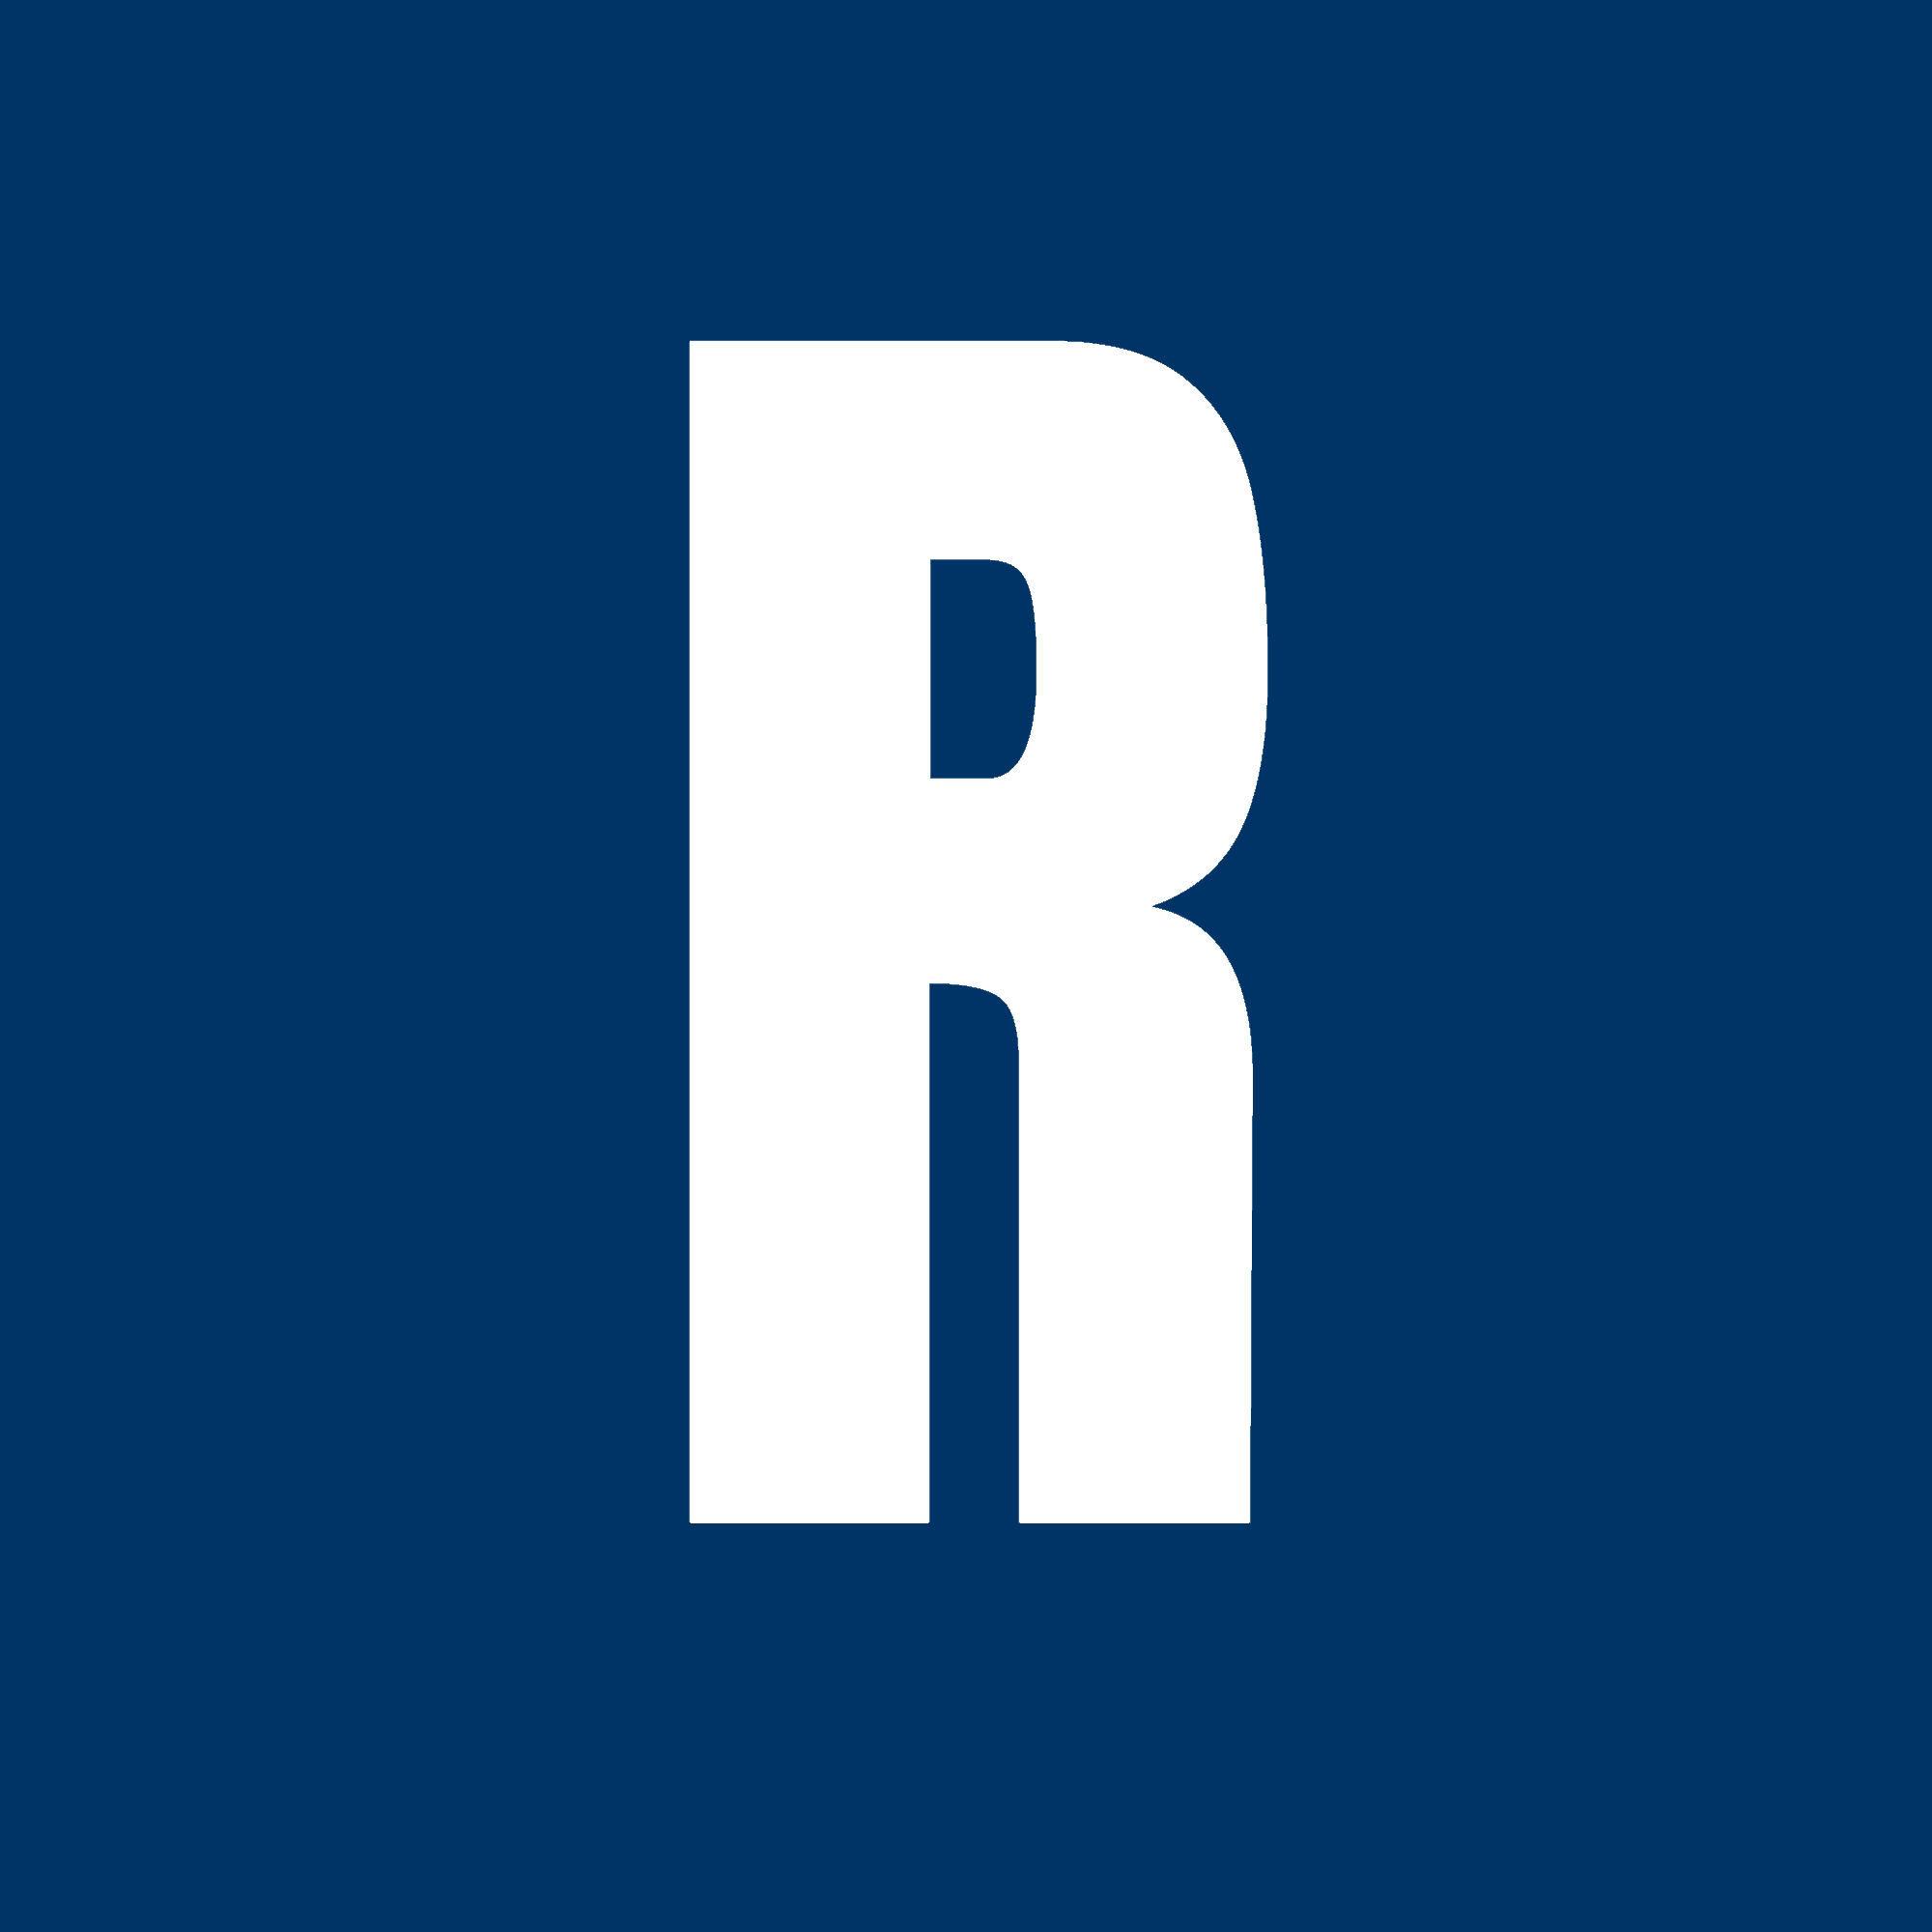 This is the Reno icon logo